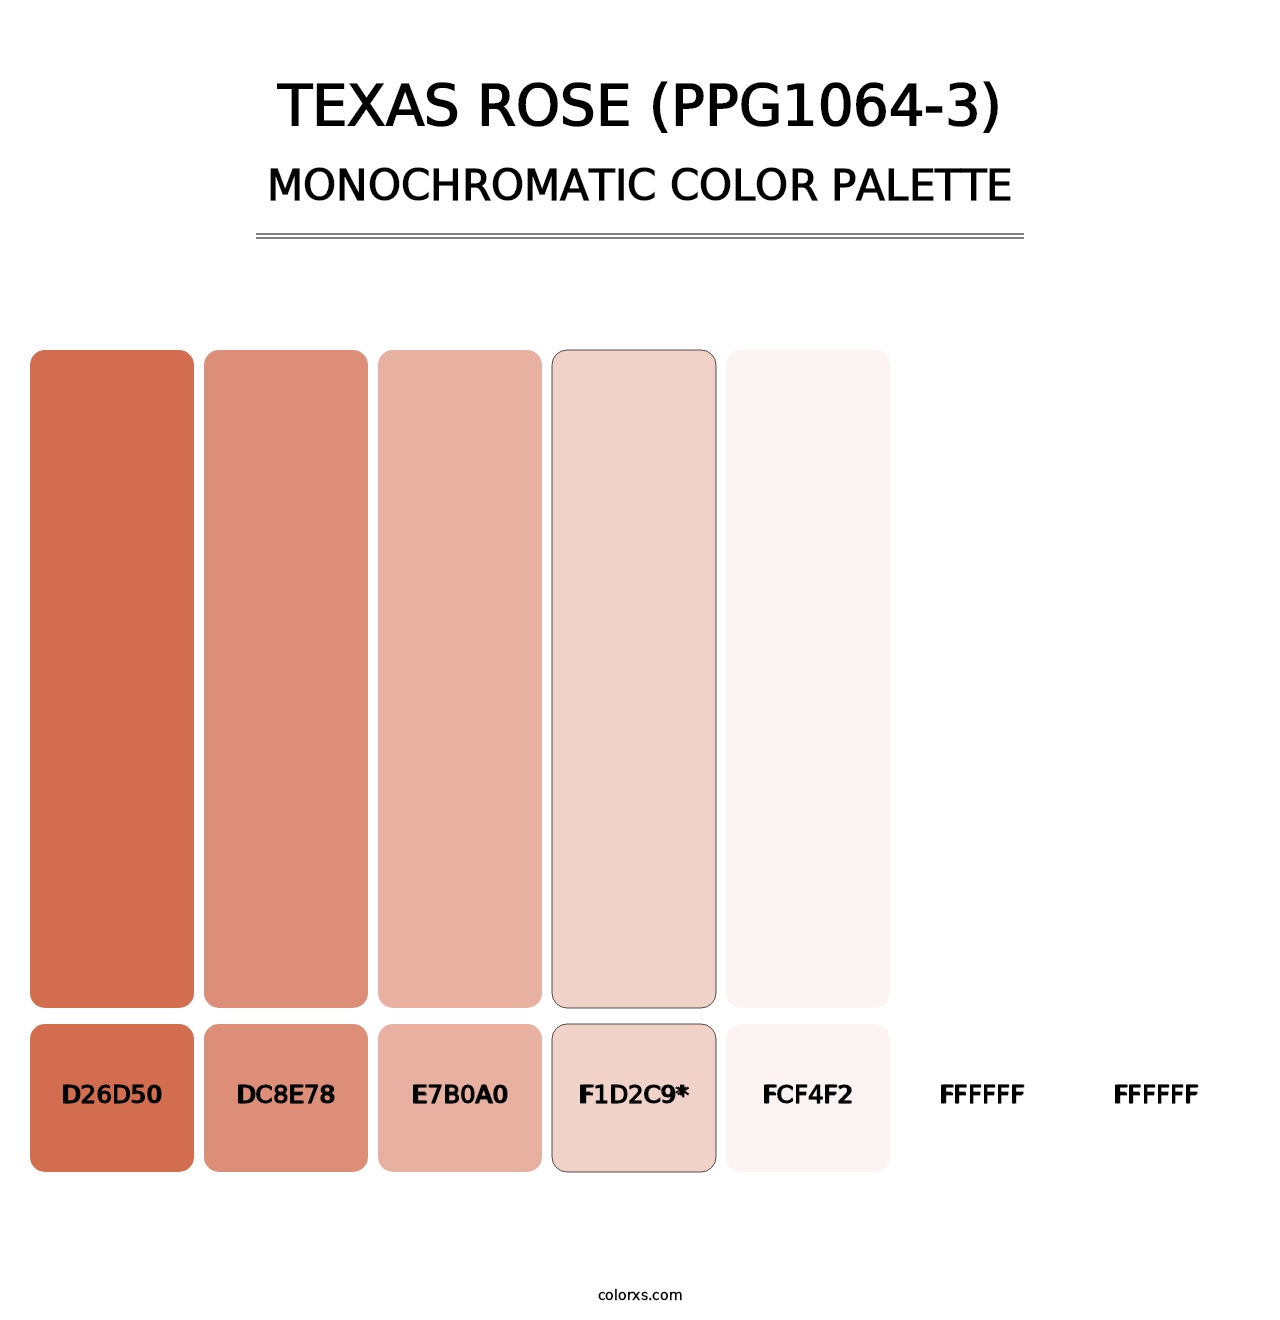 Texas Rose (PPG1064-3) - Monochromatic Color Palette